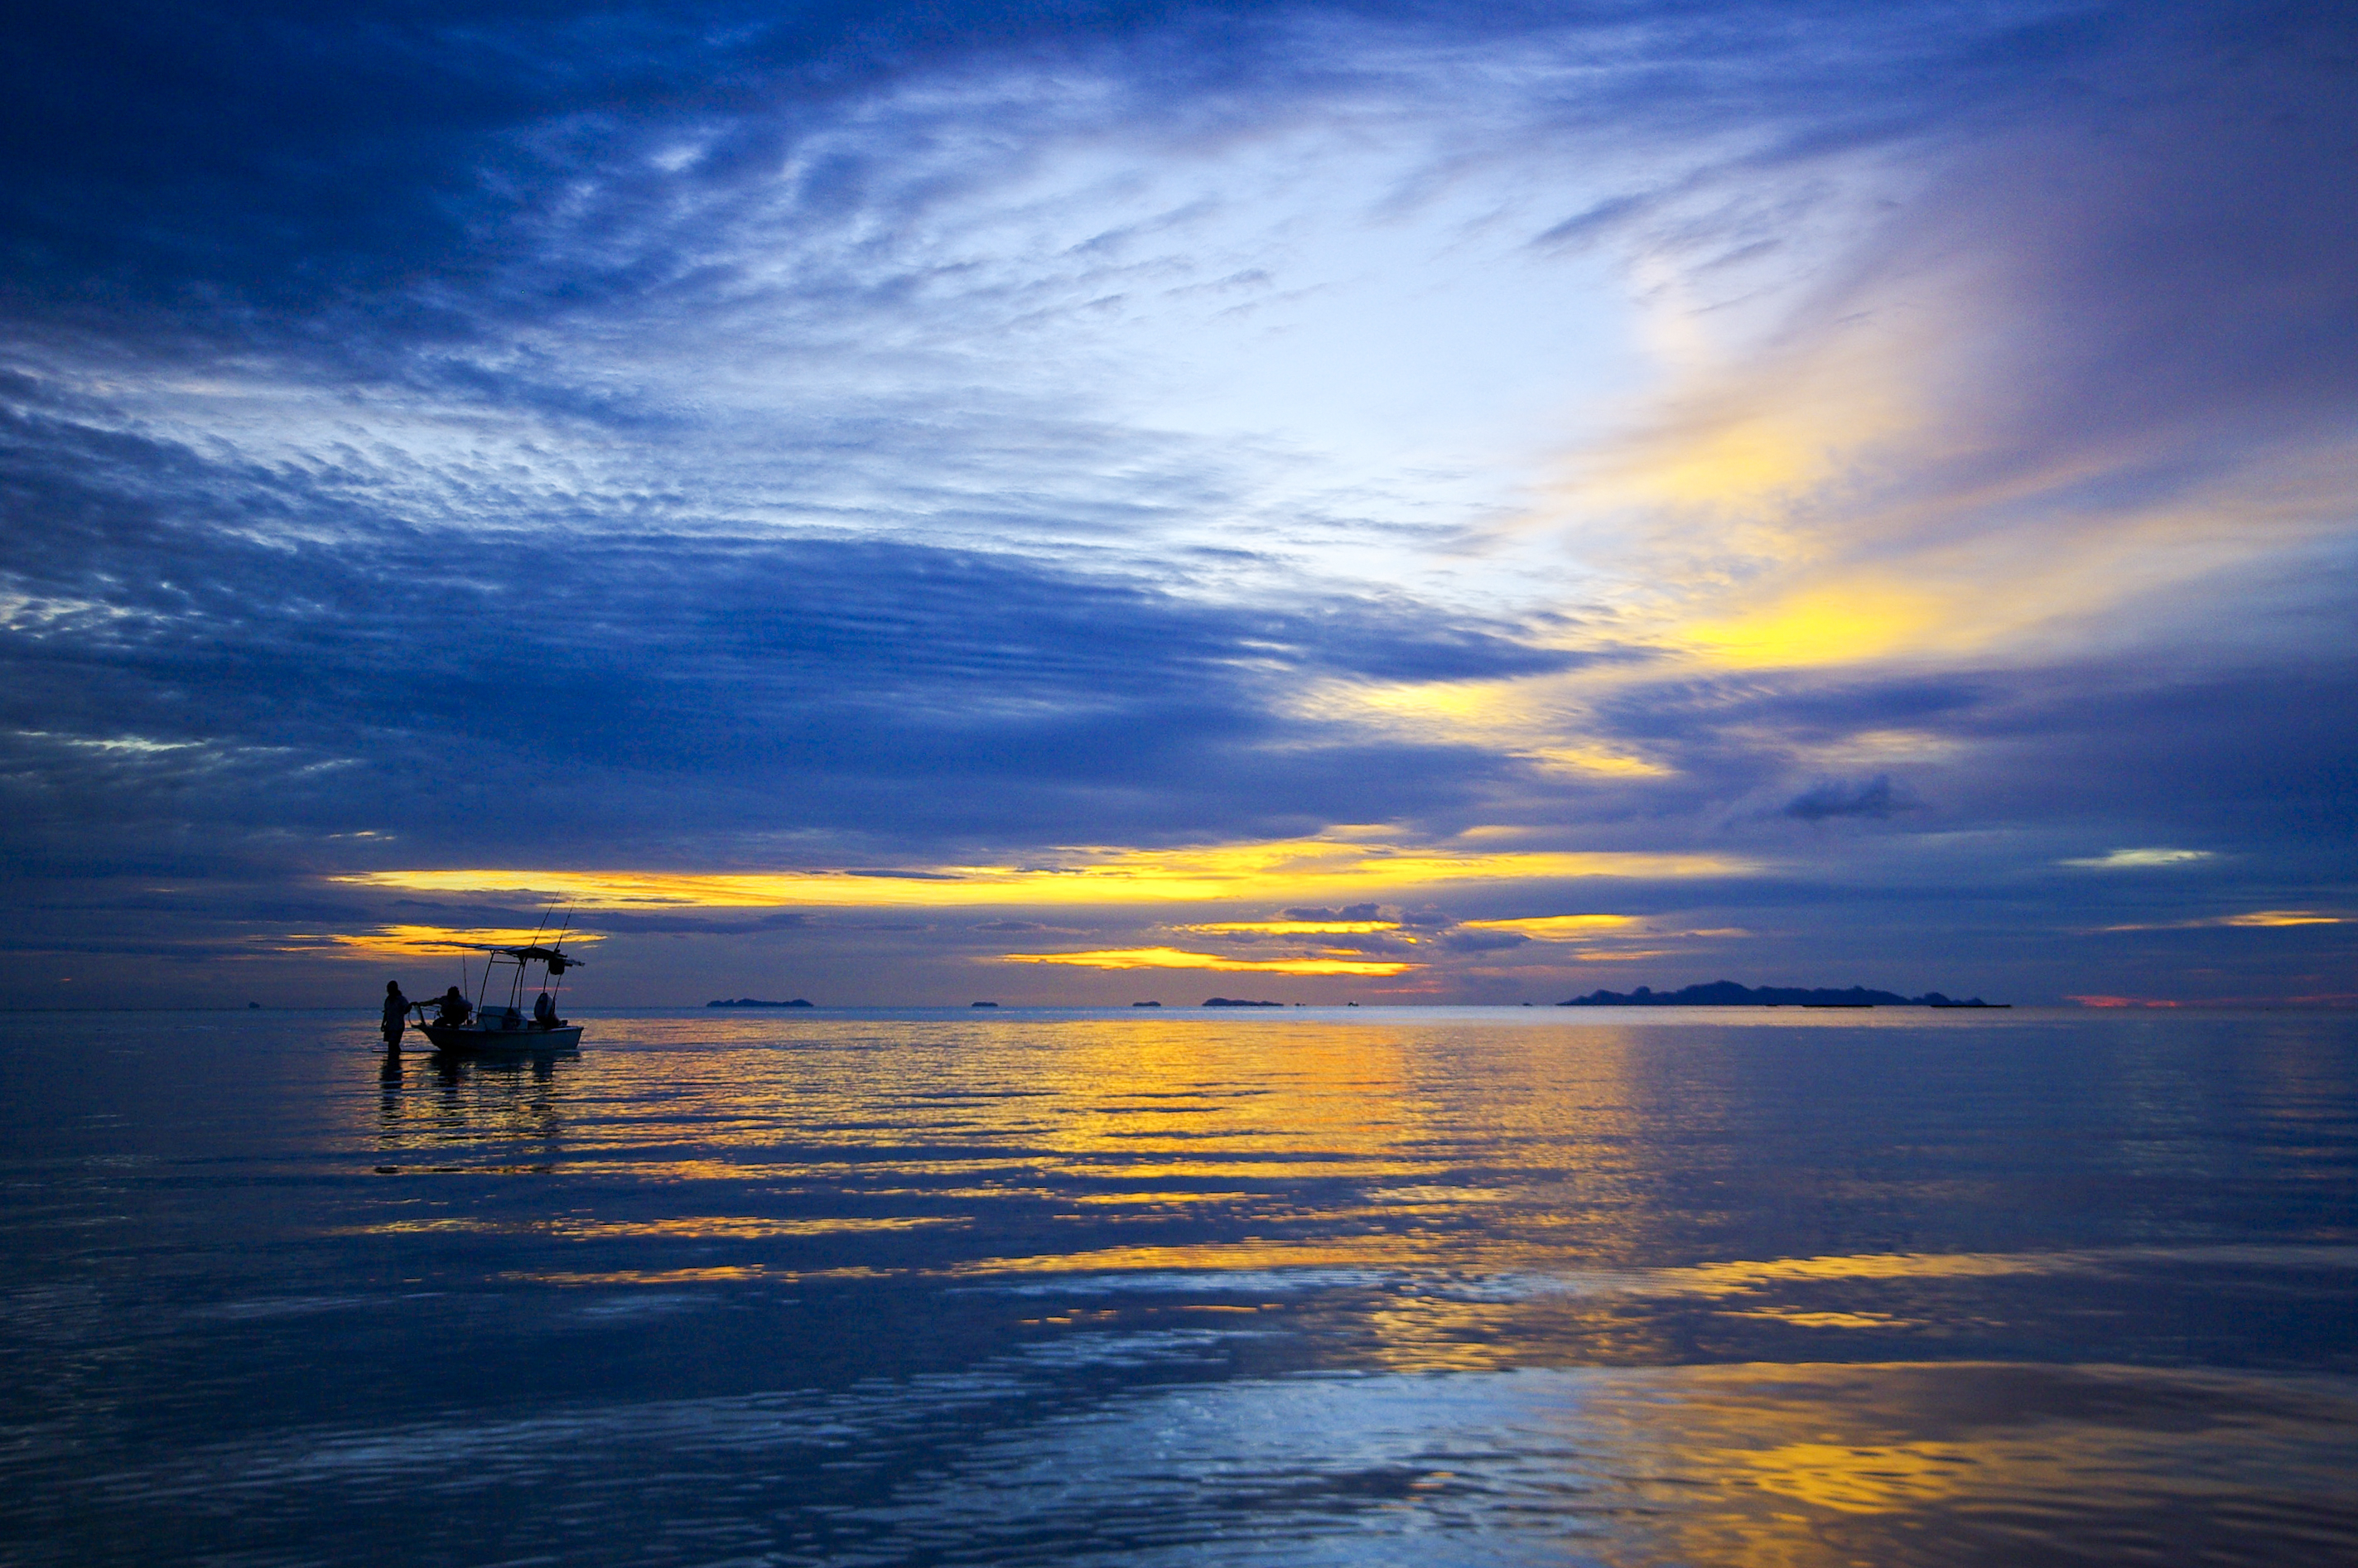 sunset-with-boat-samui-thailand-sea-sbi-301086691.jpg